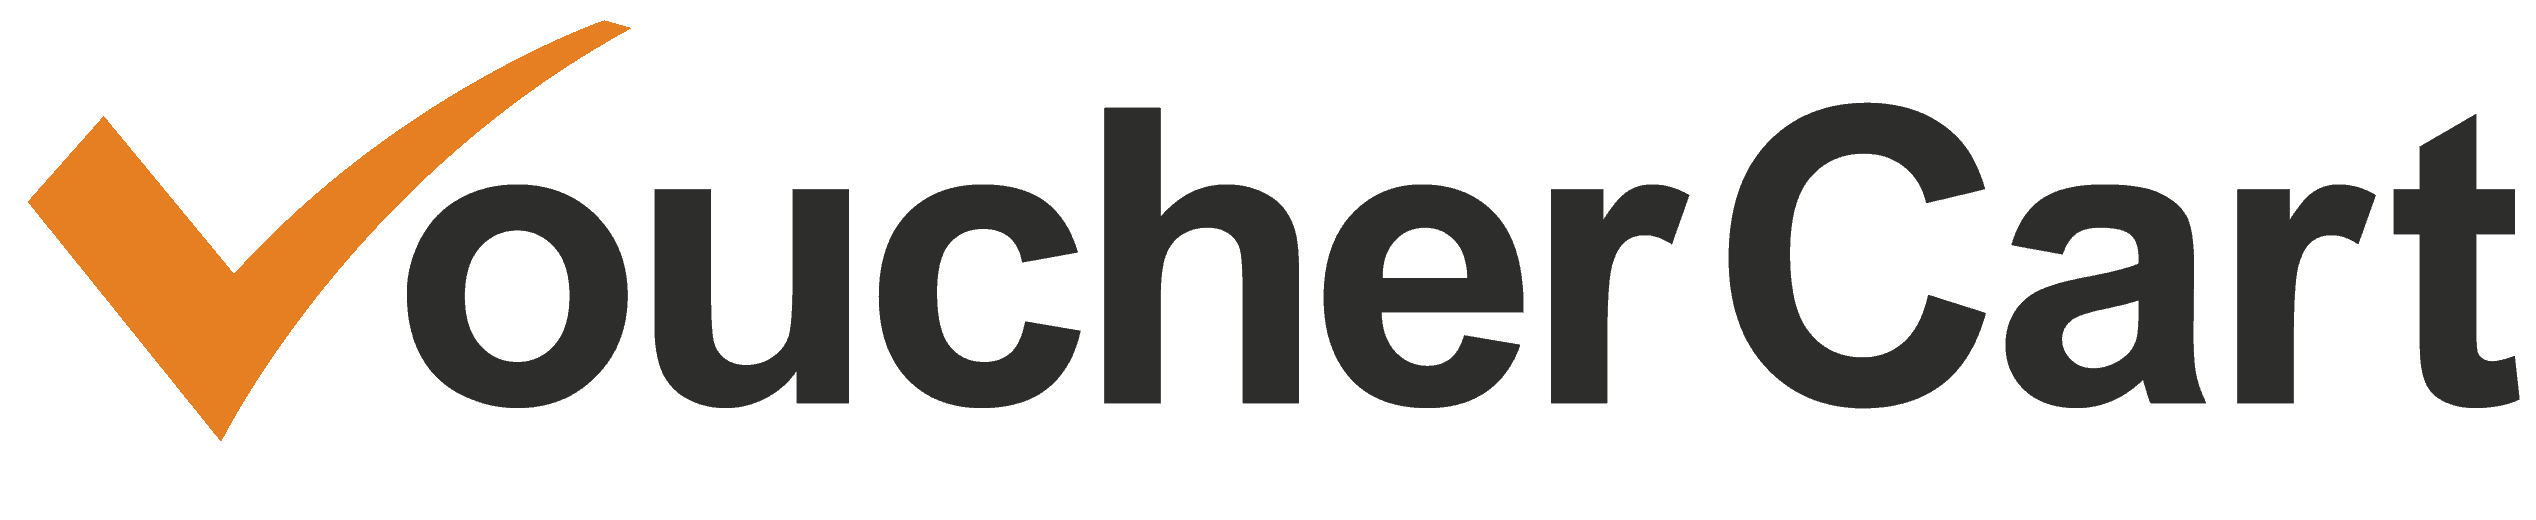 Vouchercart Company Logo